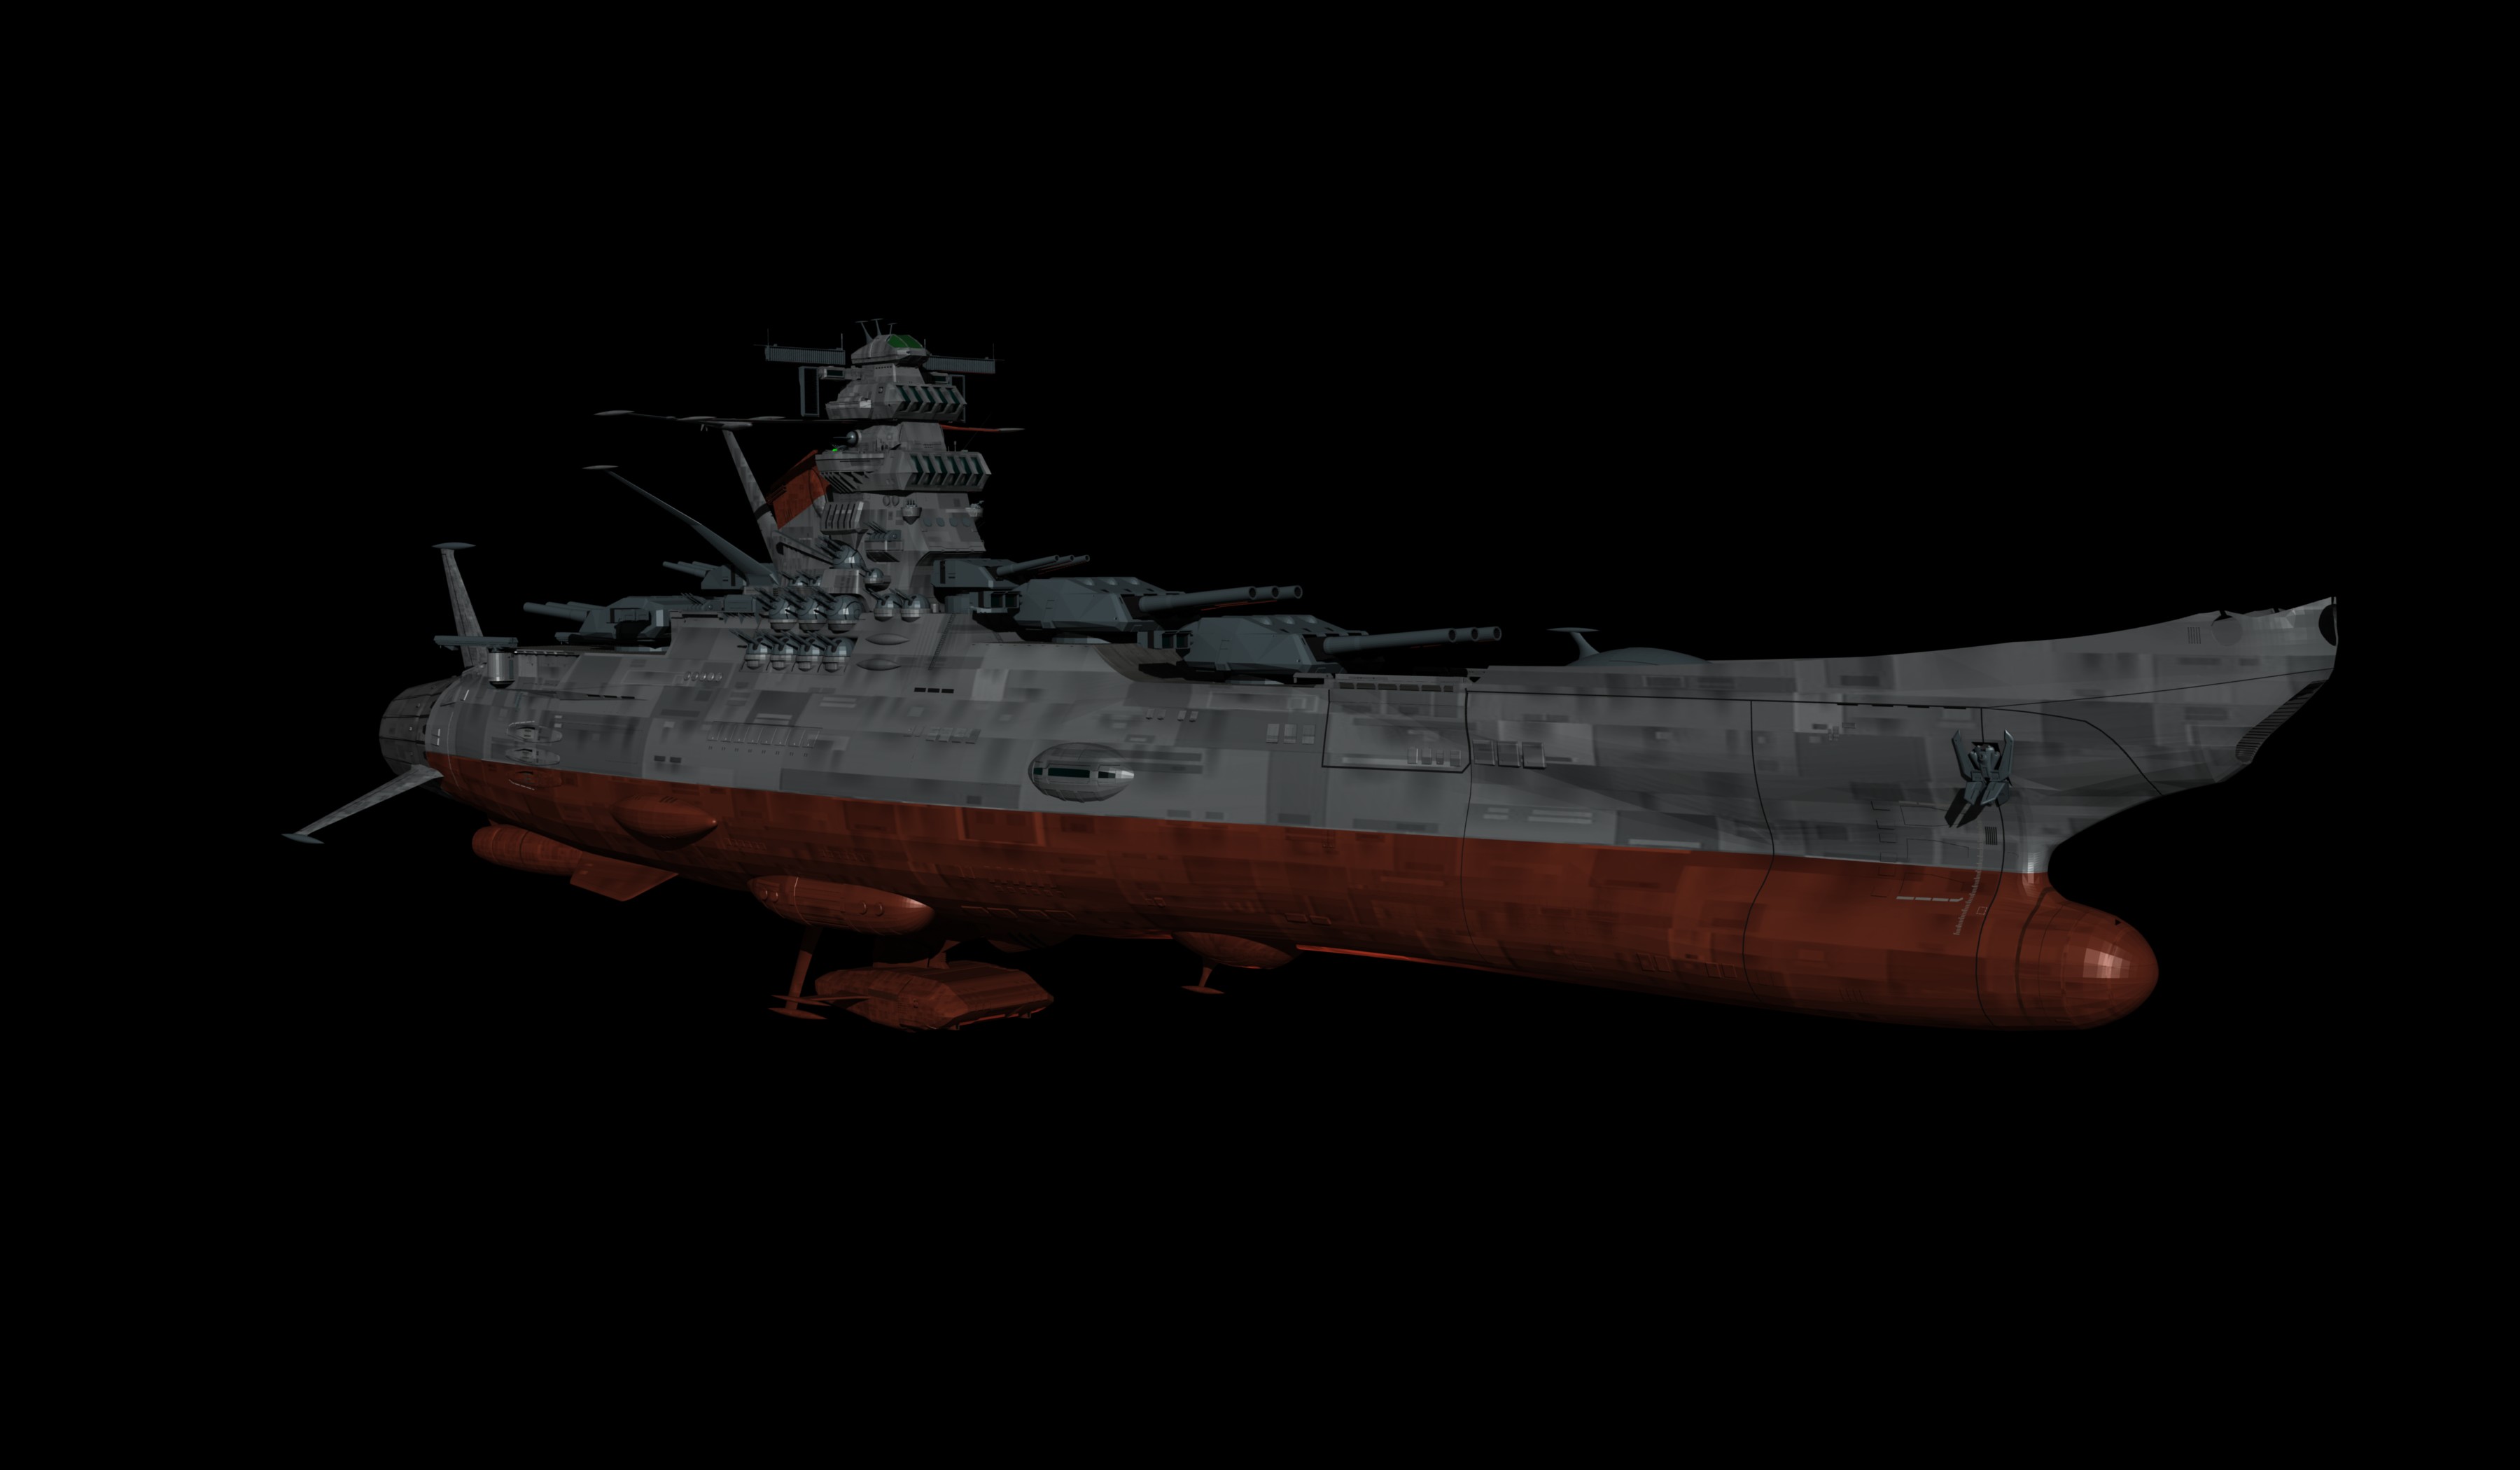 Space Battleship Yamato by dragonpyper